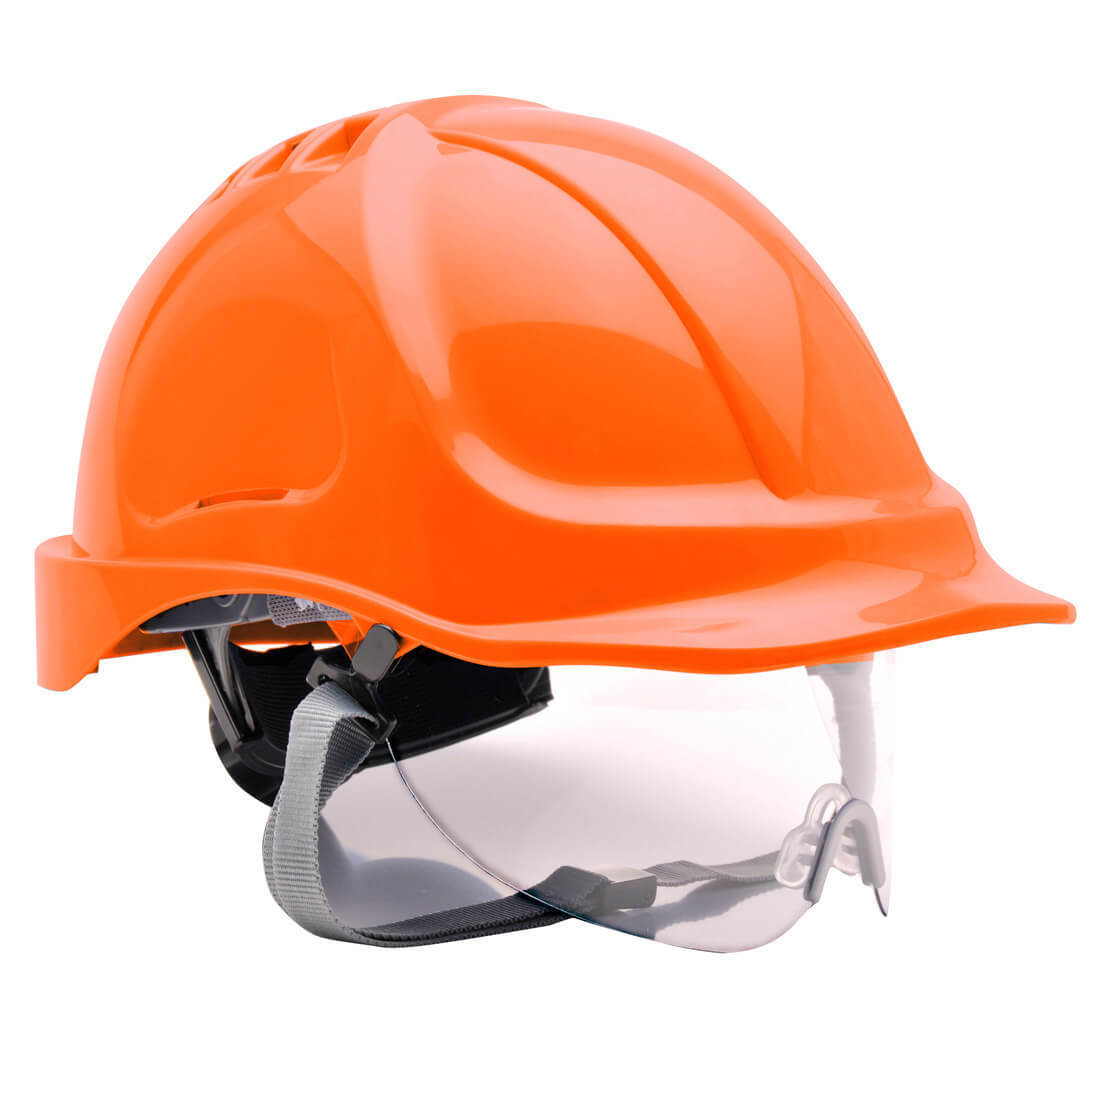 Endurance Visor Helmet - Personal protection